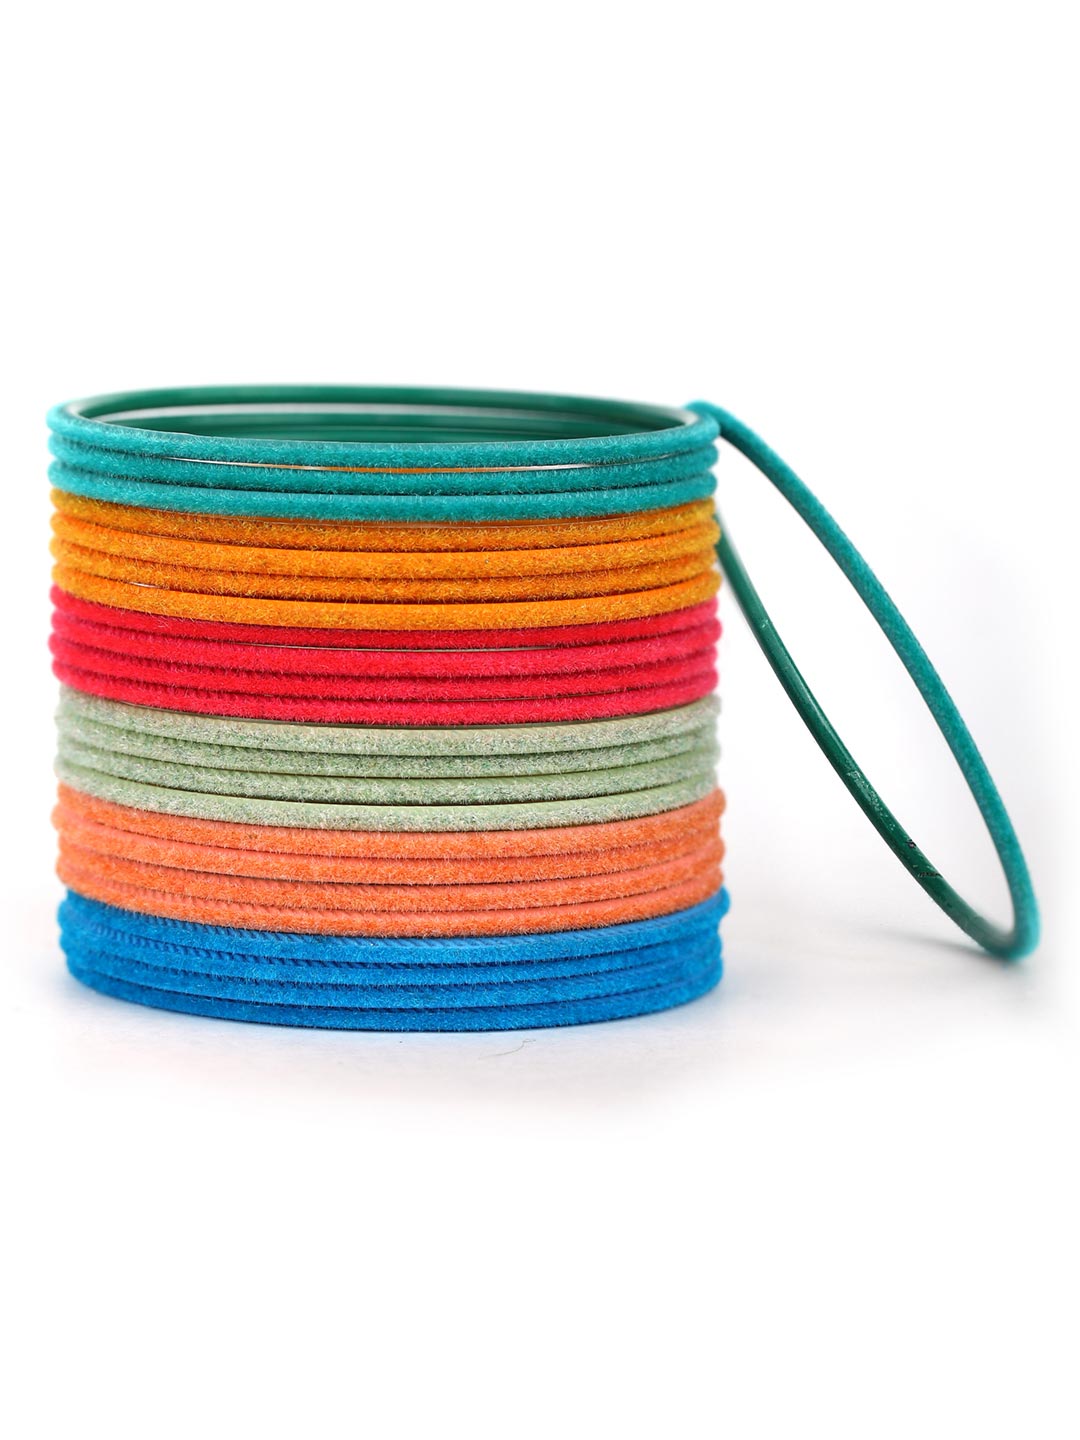 Stretchy Tile Multi-Color Bracelet | Twinkle Twinkle Little One